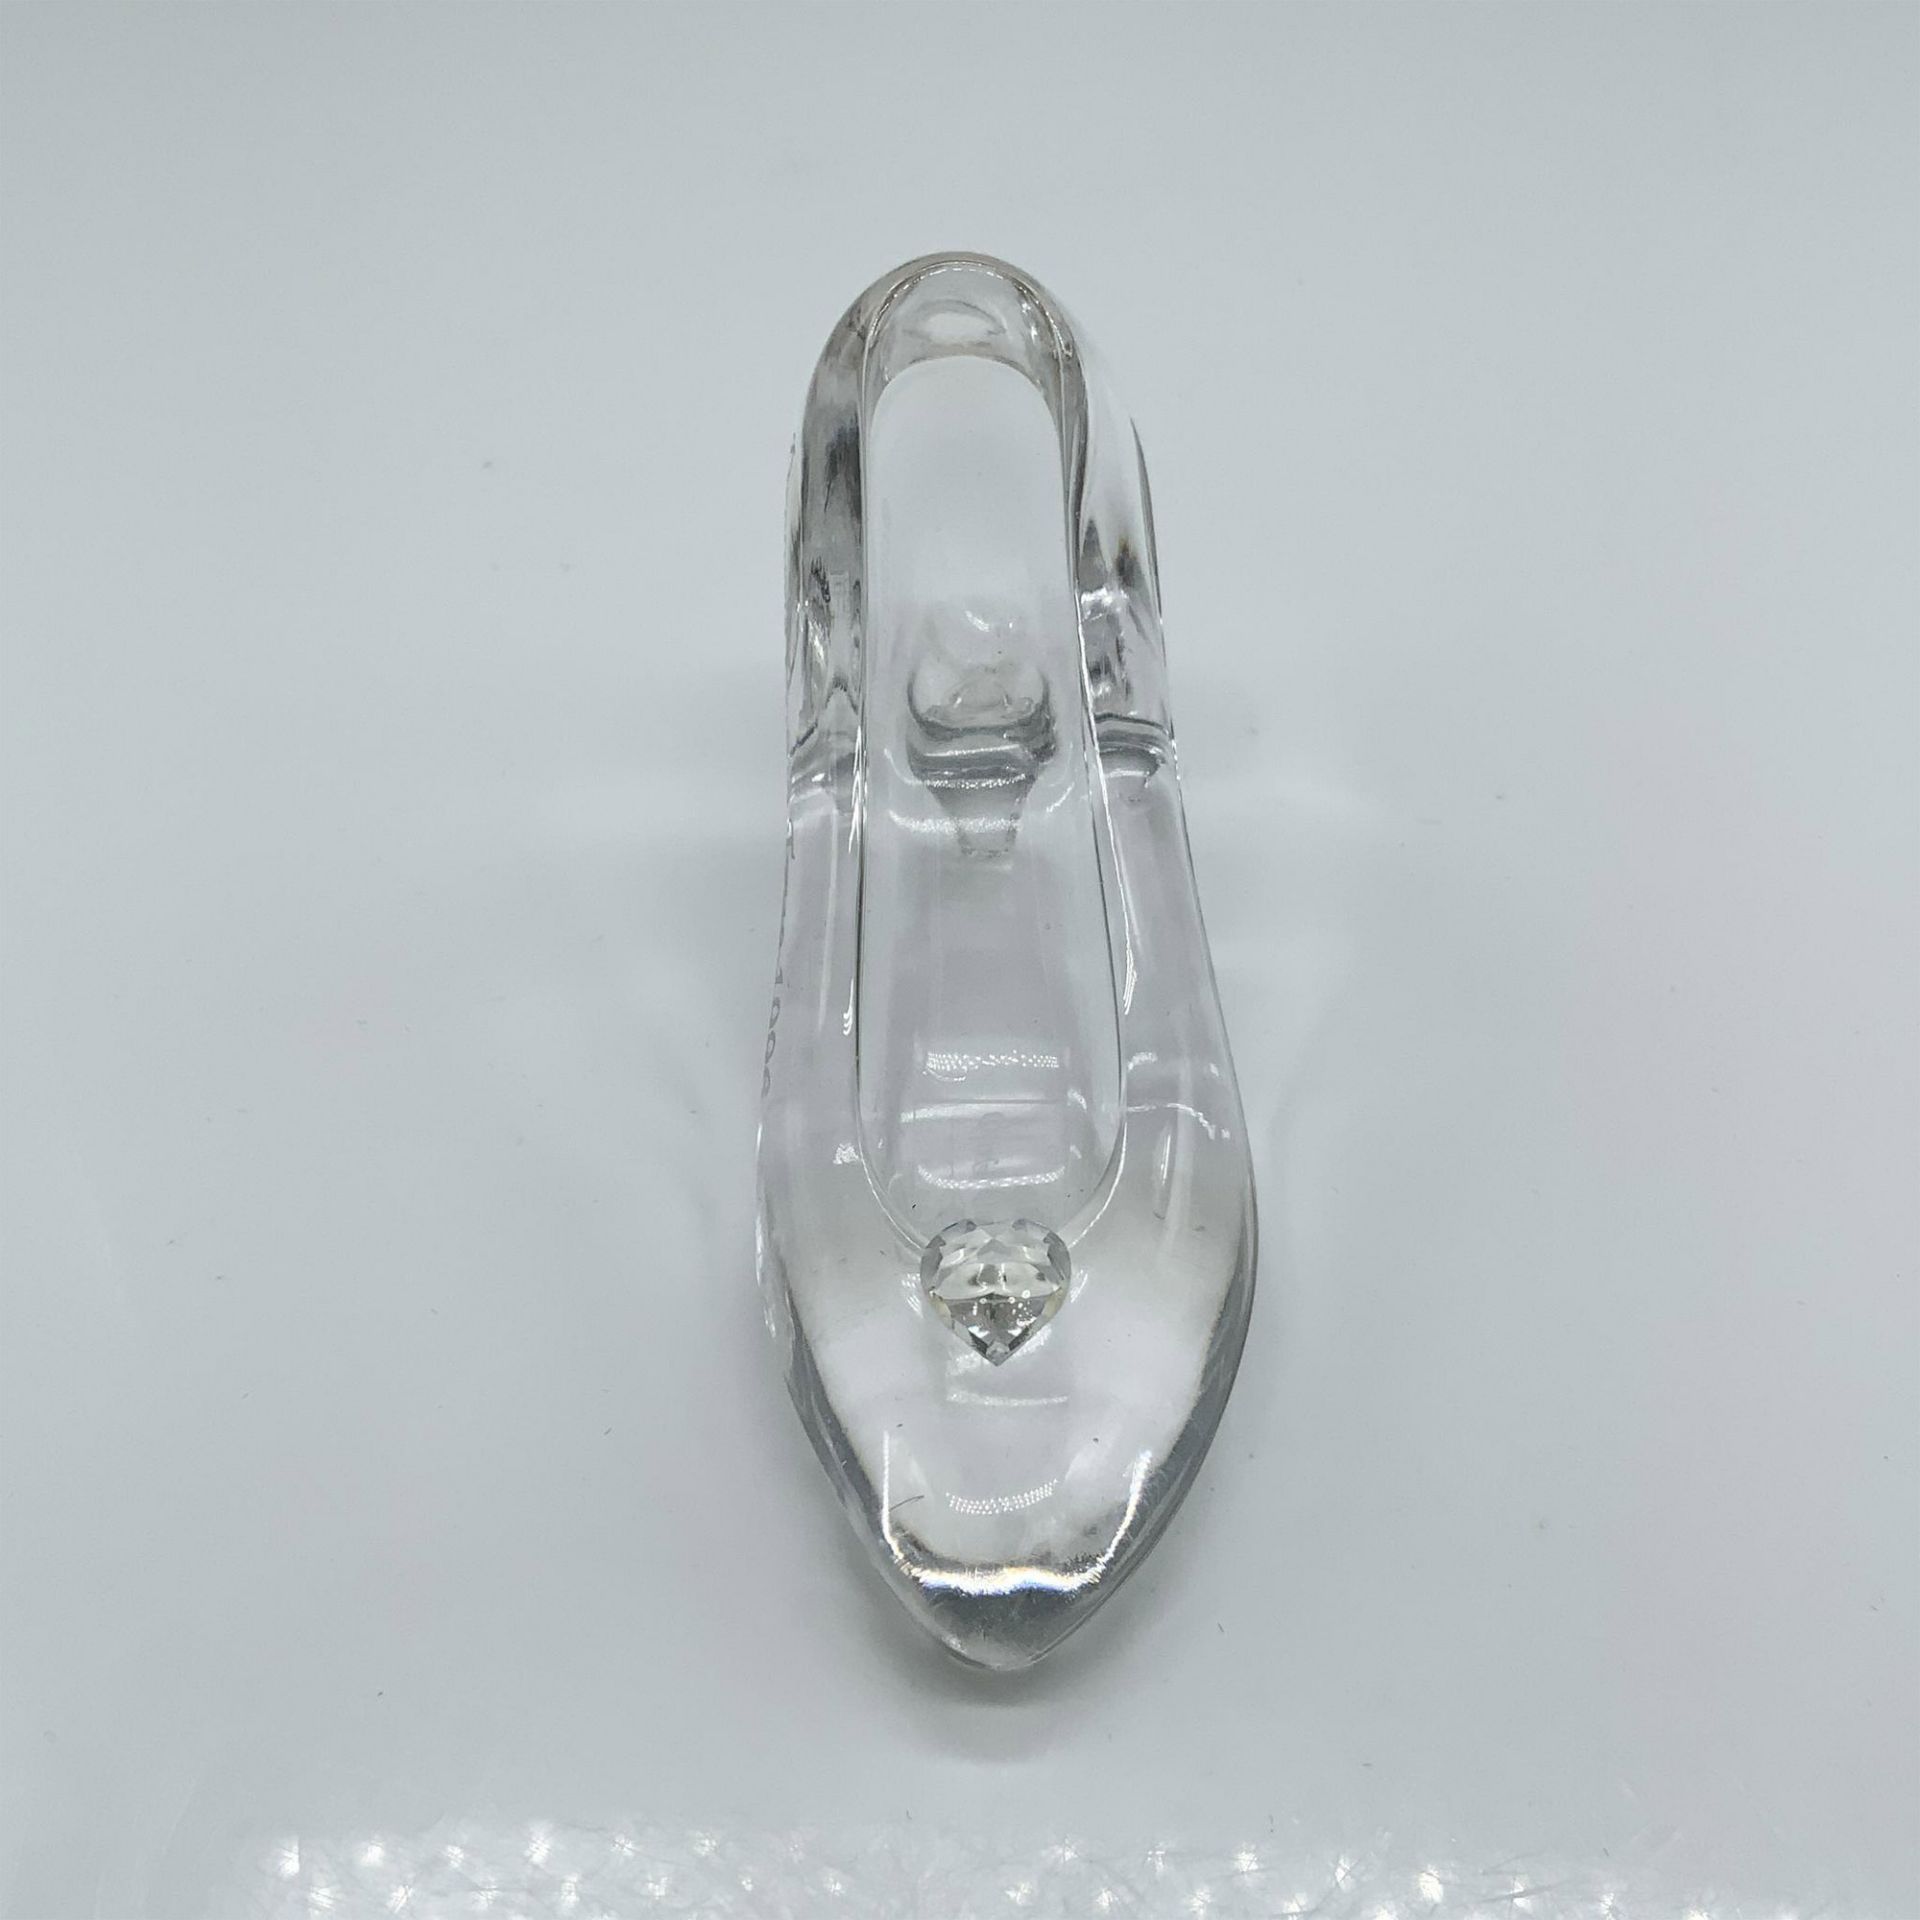 Walt Disney Classics Figurine Cinderella's Glass Slipper - Image 3 of 4